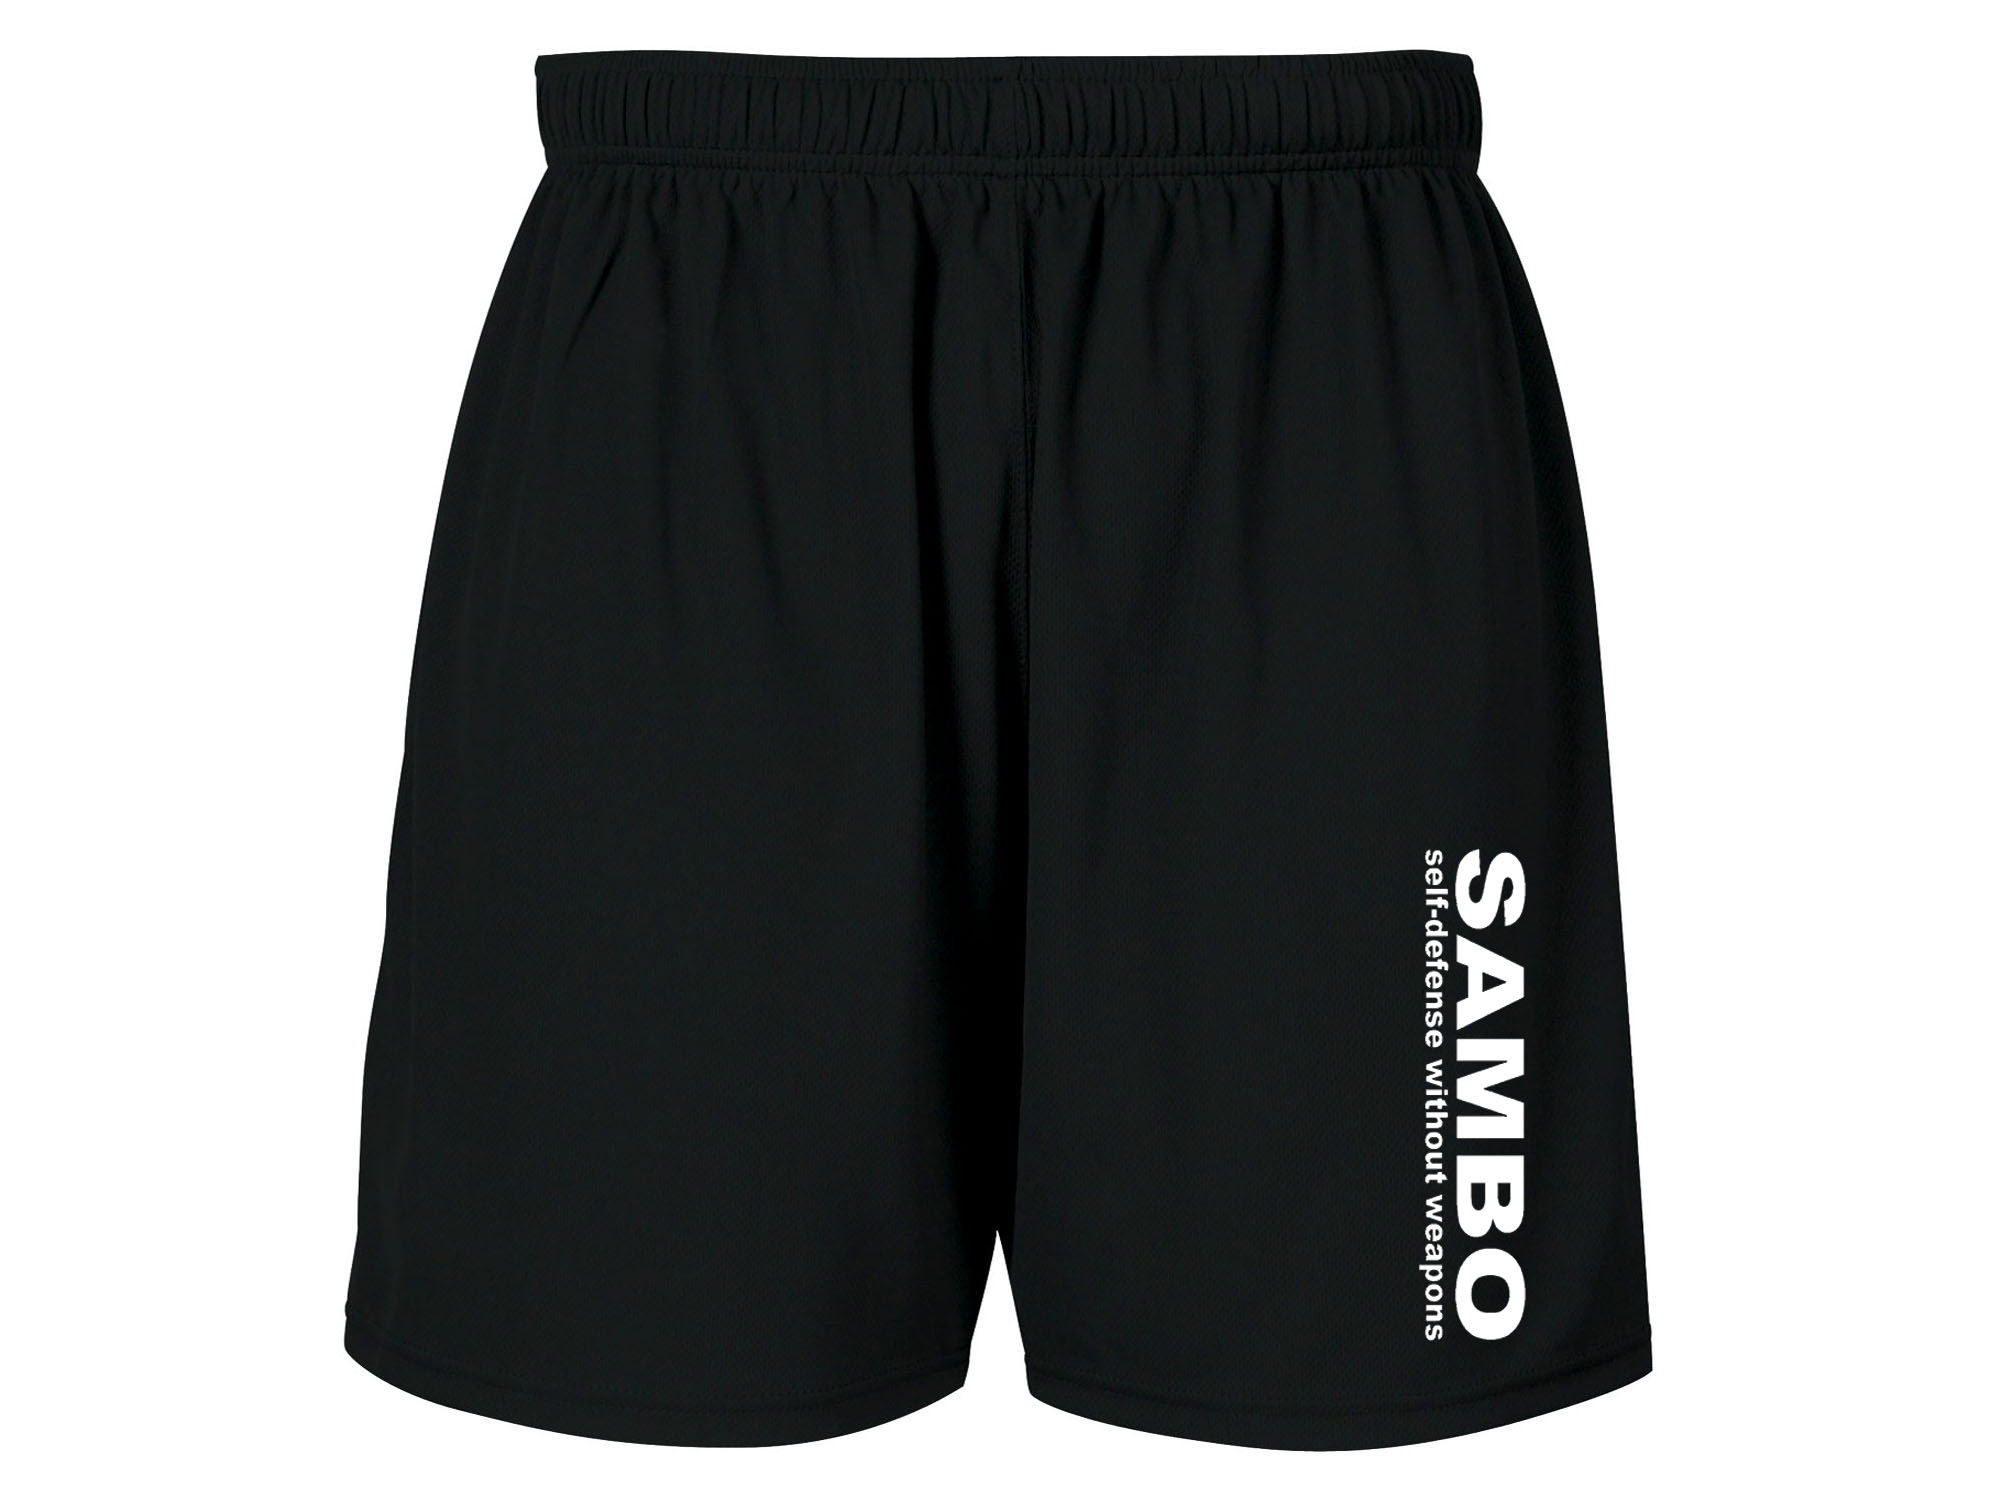 Sambo MMA Martial arts sweat proof polyester workout shorts